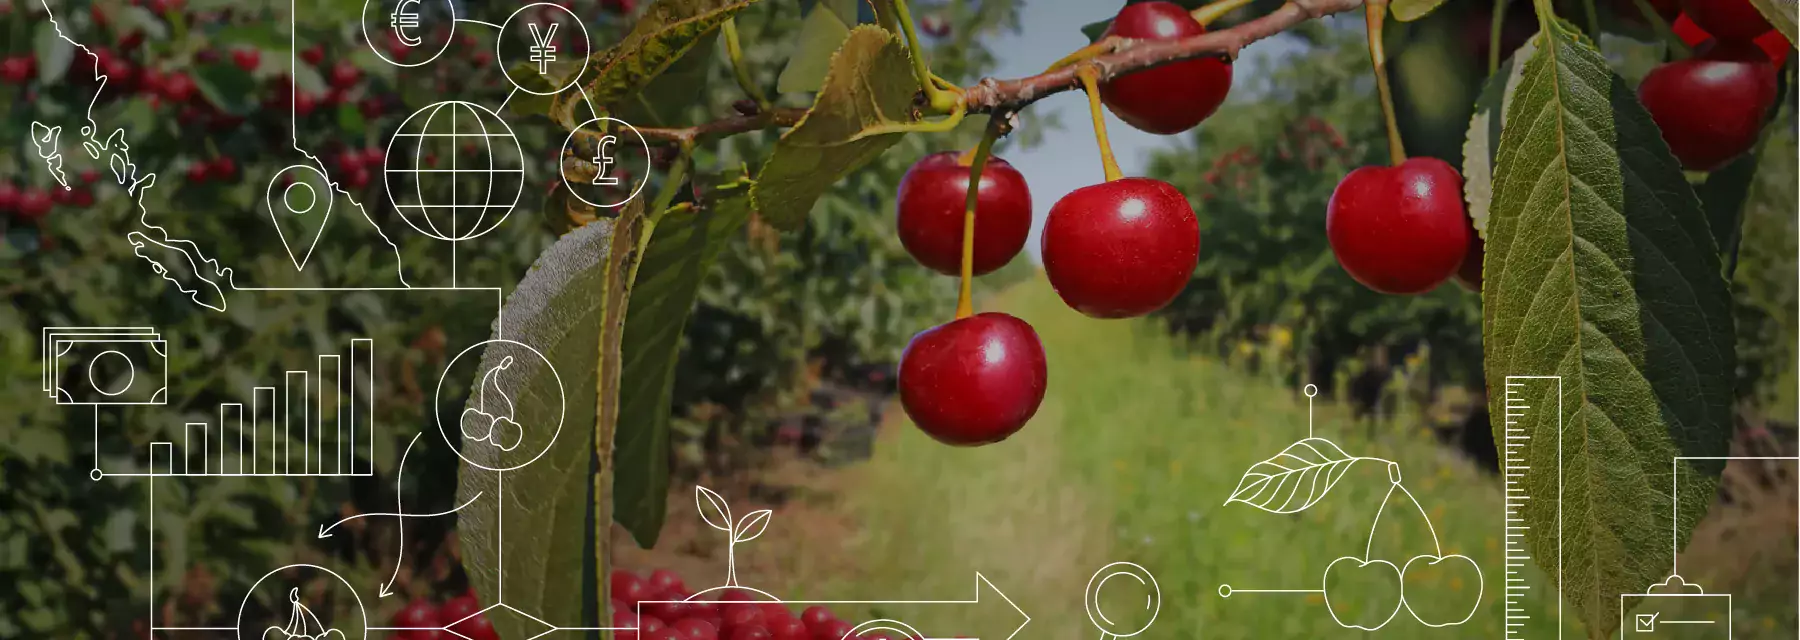 Agri-Food Canada - Cherry Picking DIA